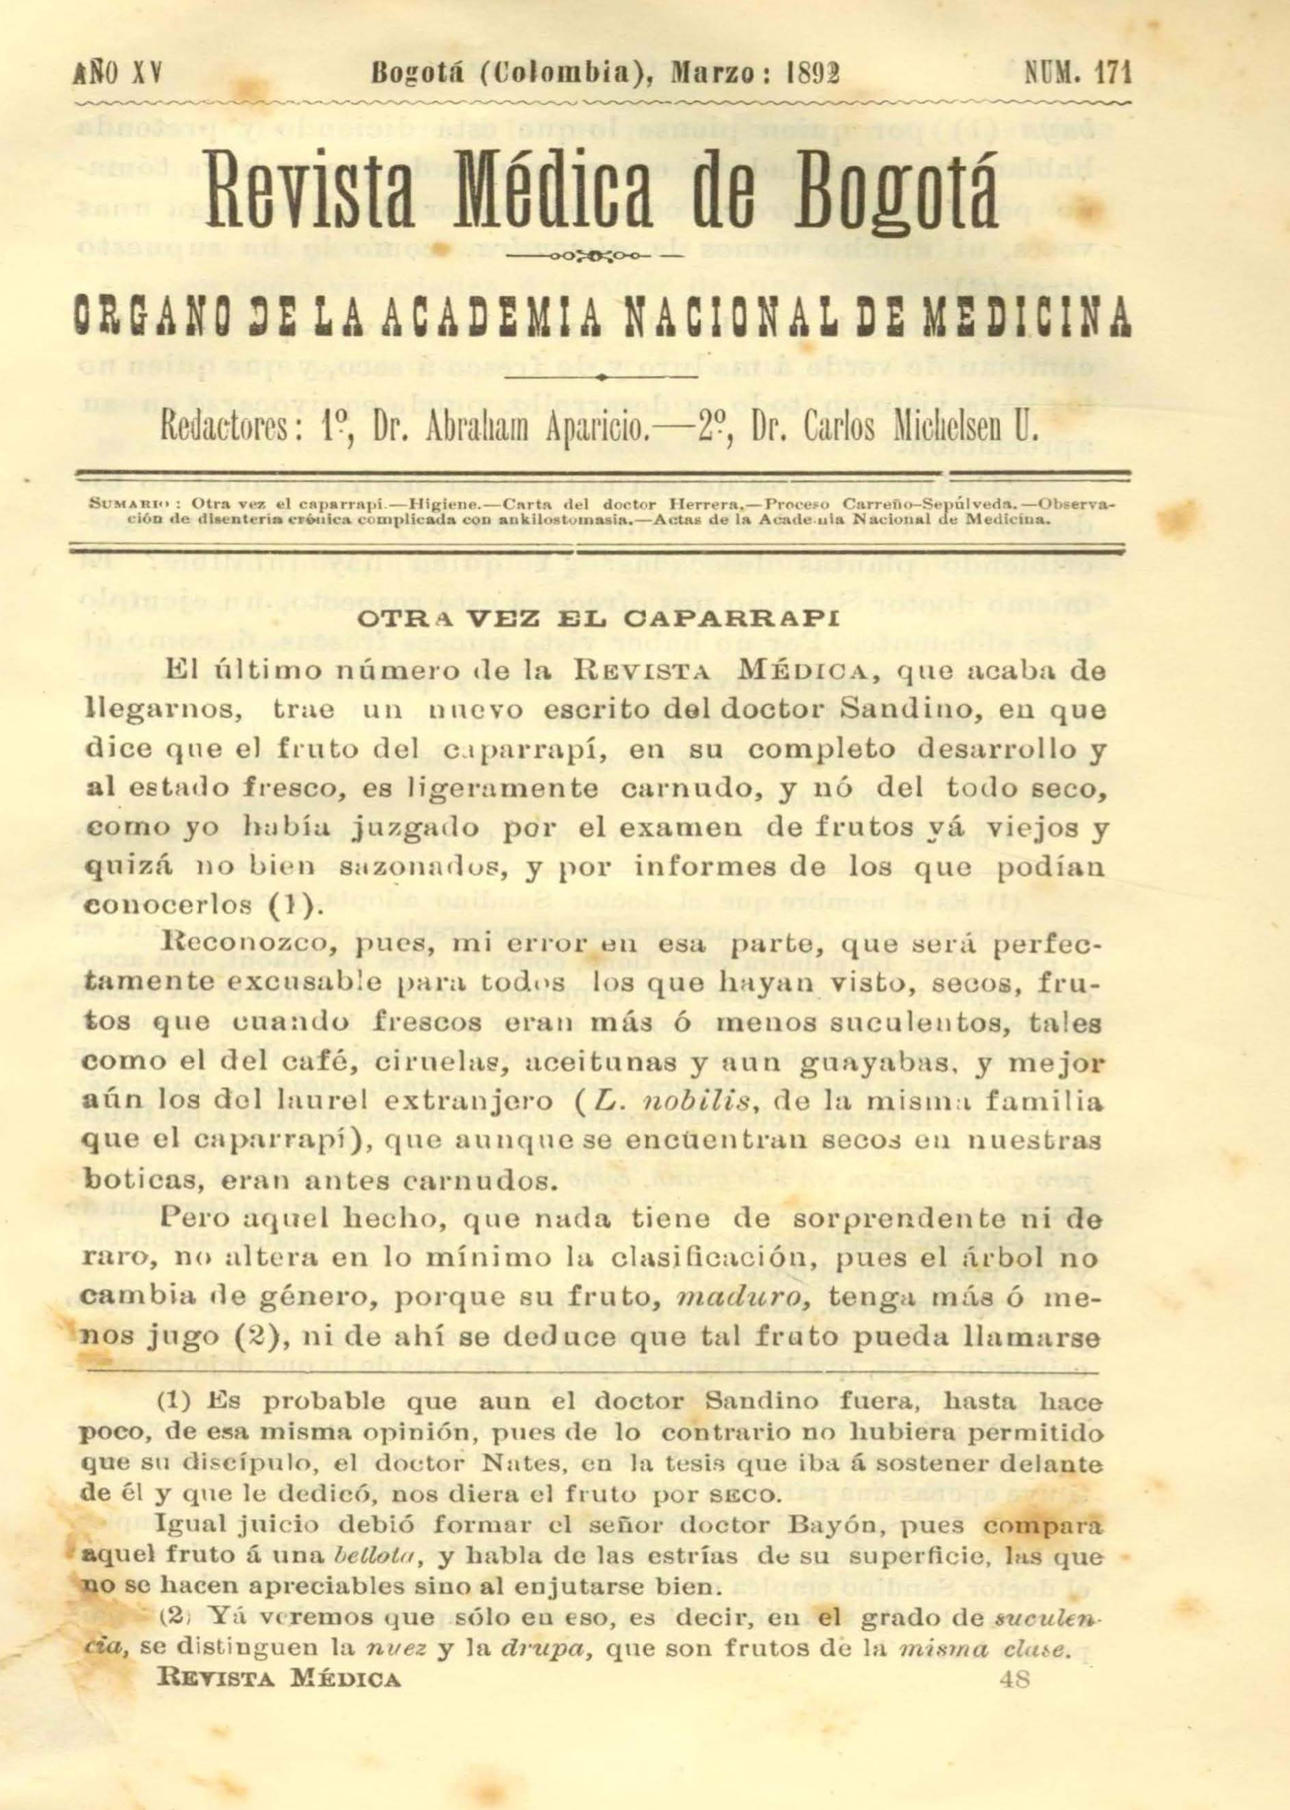 					Ver Vol. 15 Núm. 171 (1892): Revista Médica de Bogotá. Serie 15. Marzo de 1892. Núm. 171
				